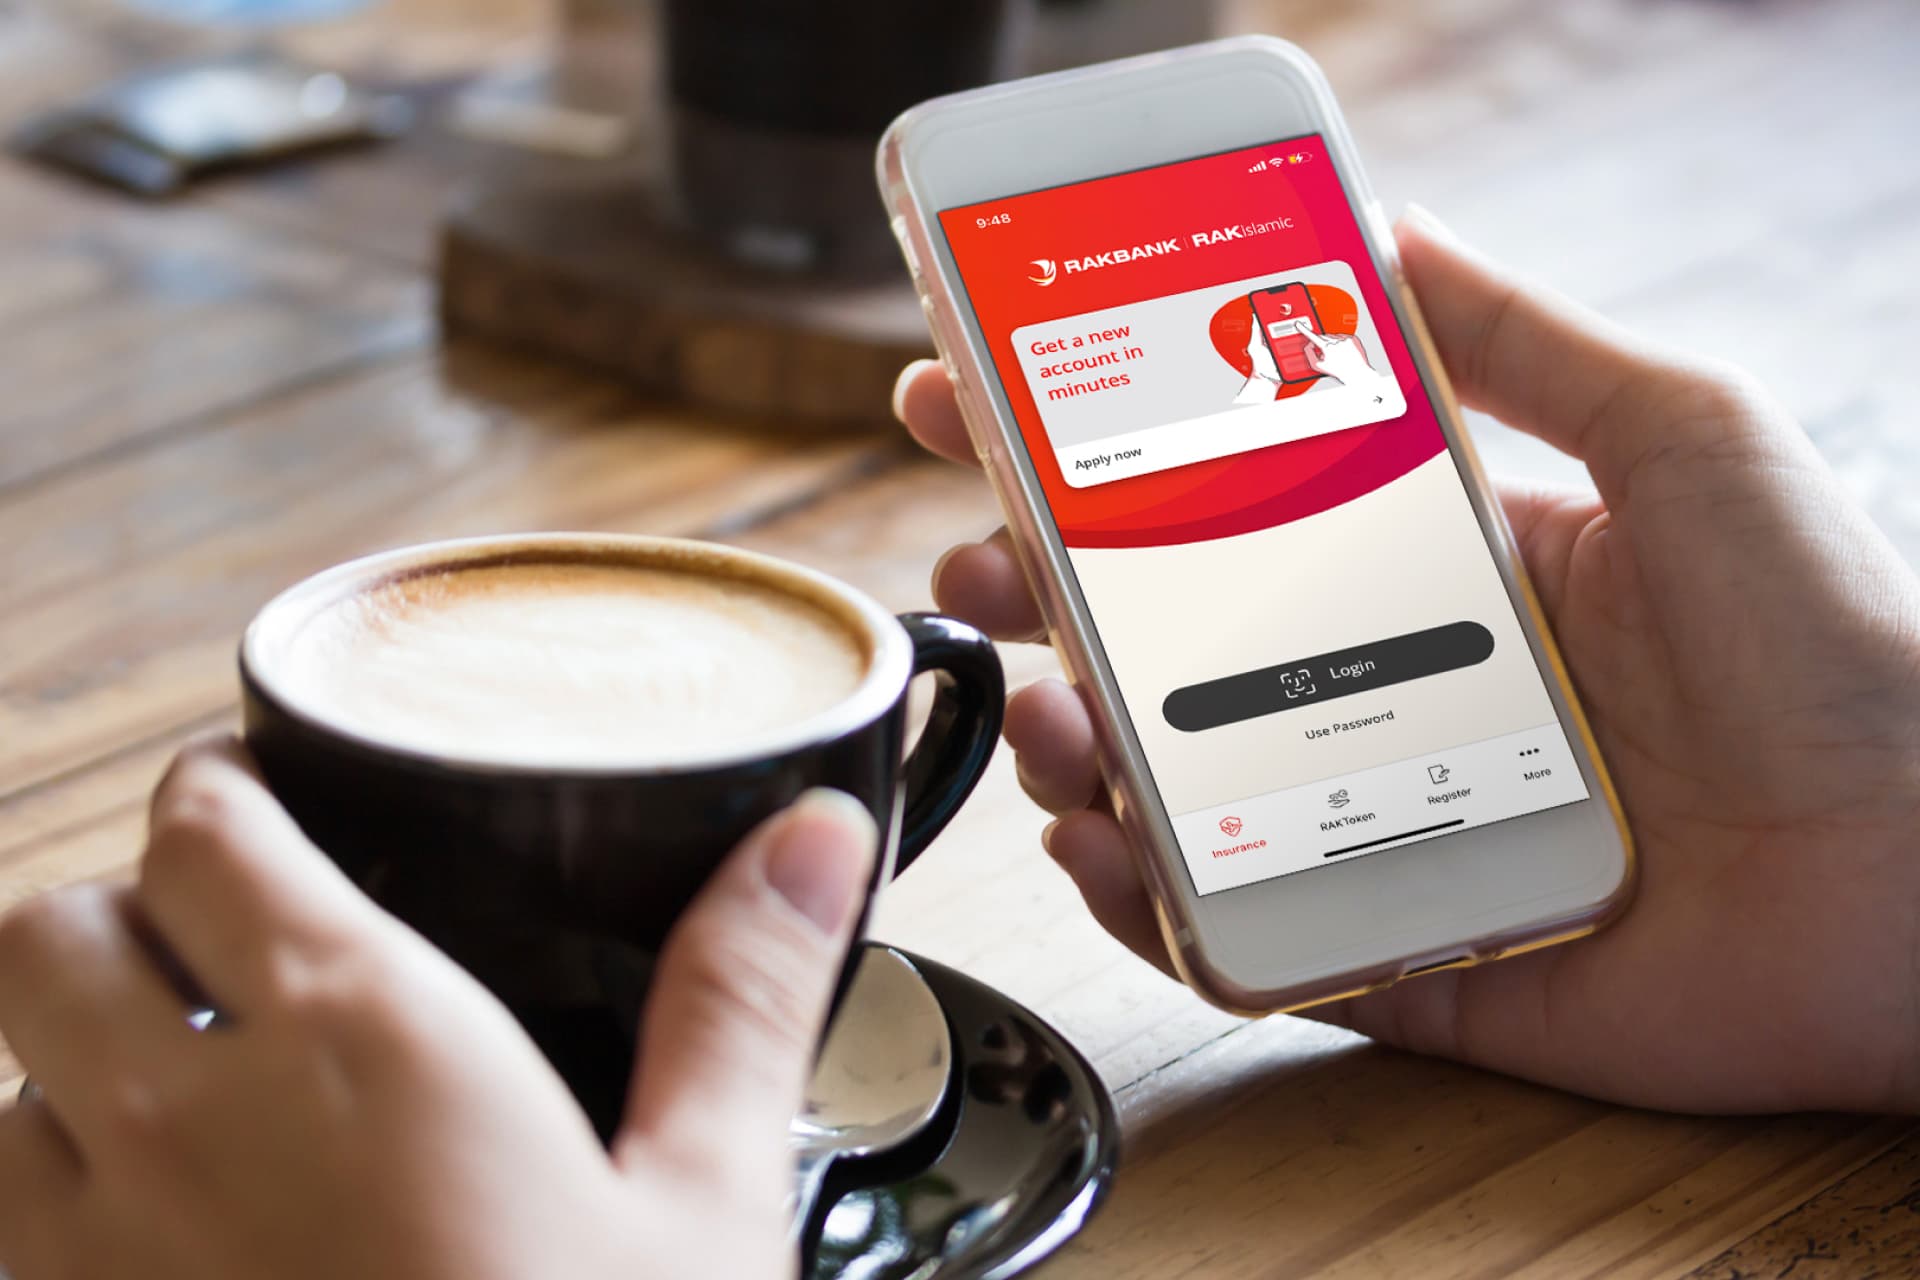 RAKBANK App: Digital banking on the Go